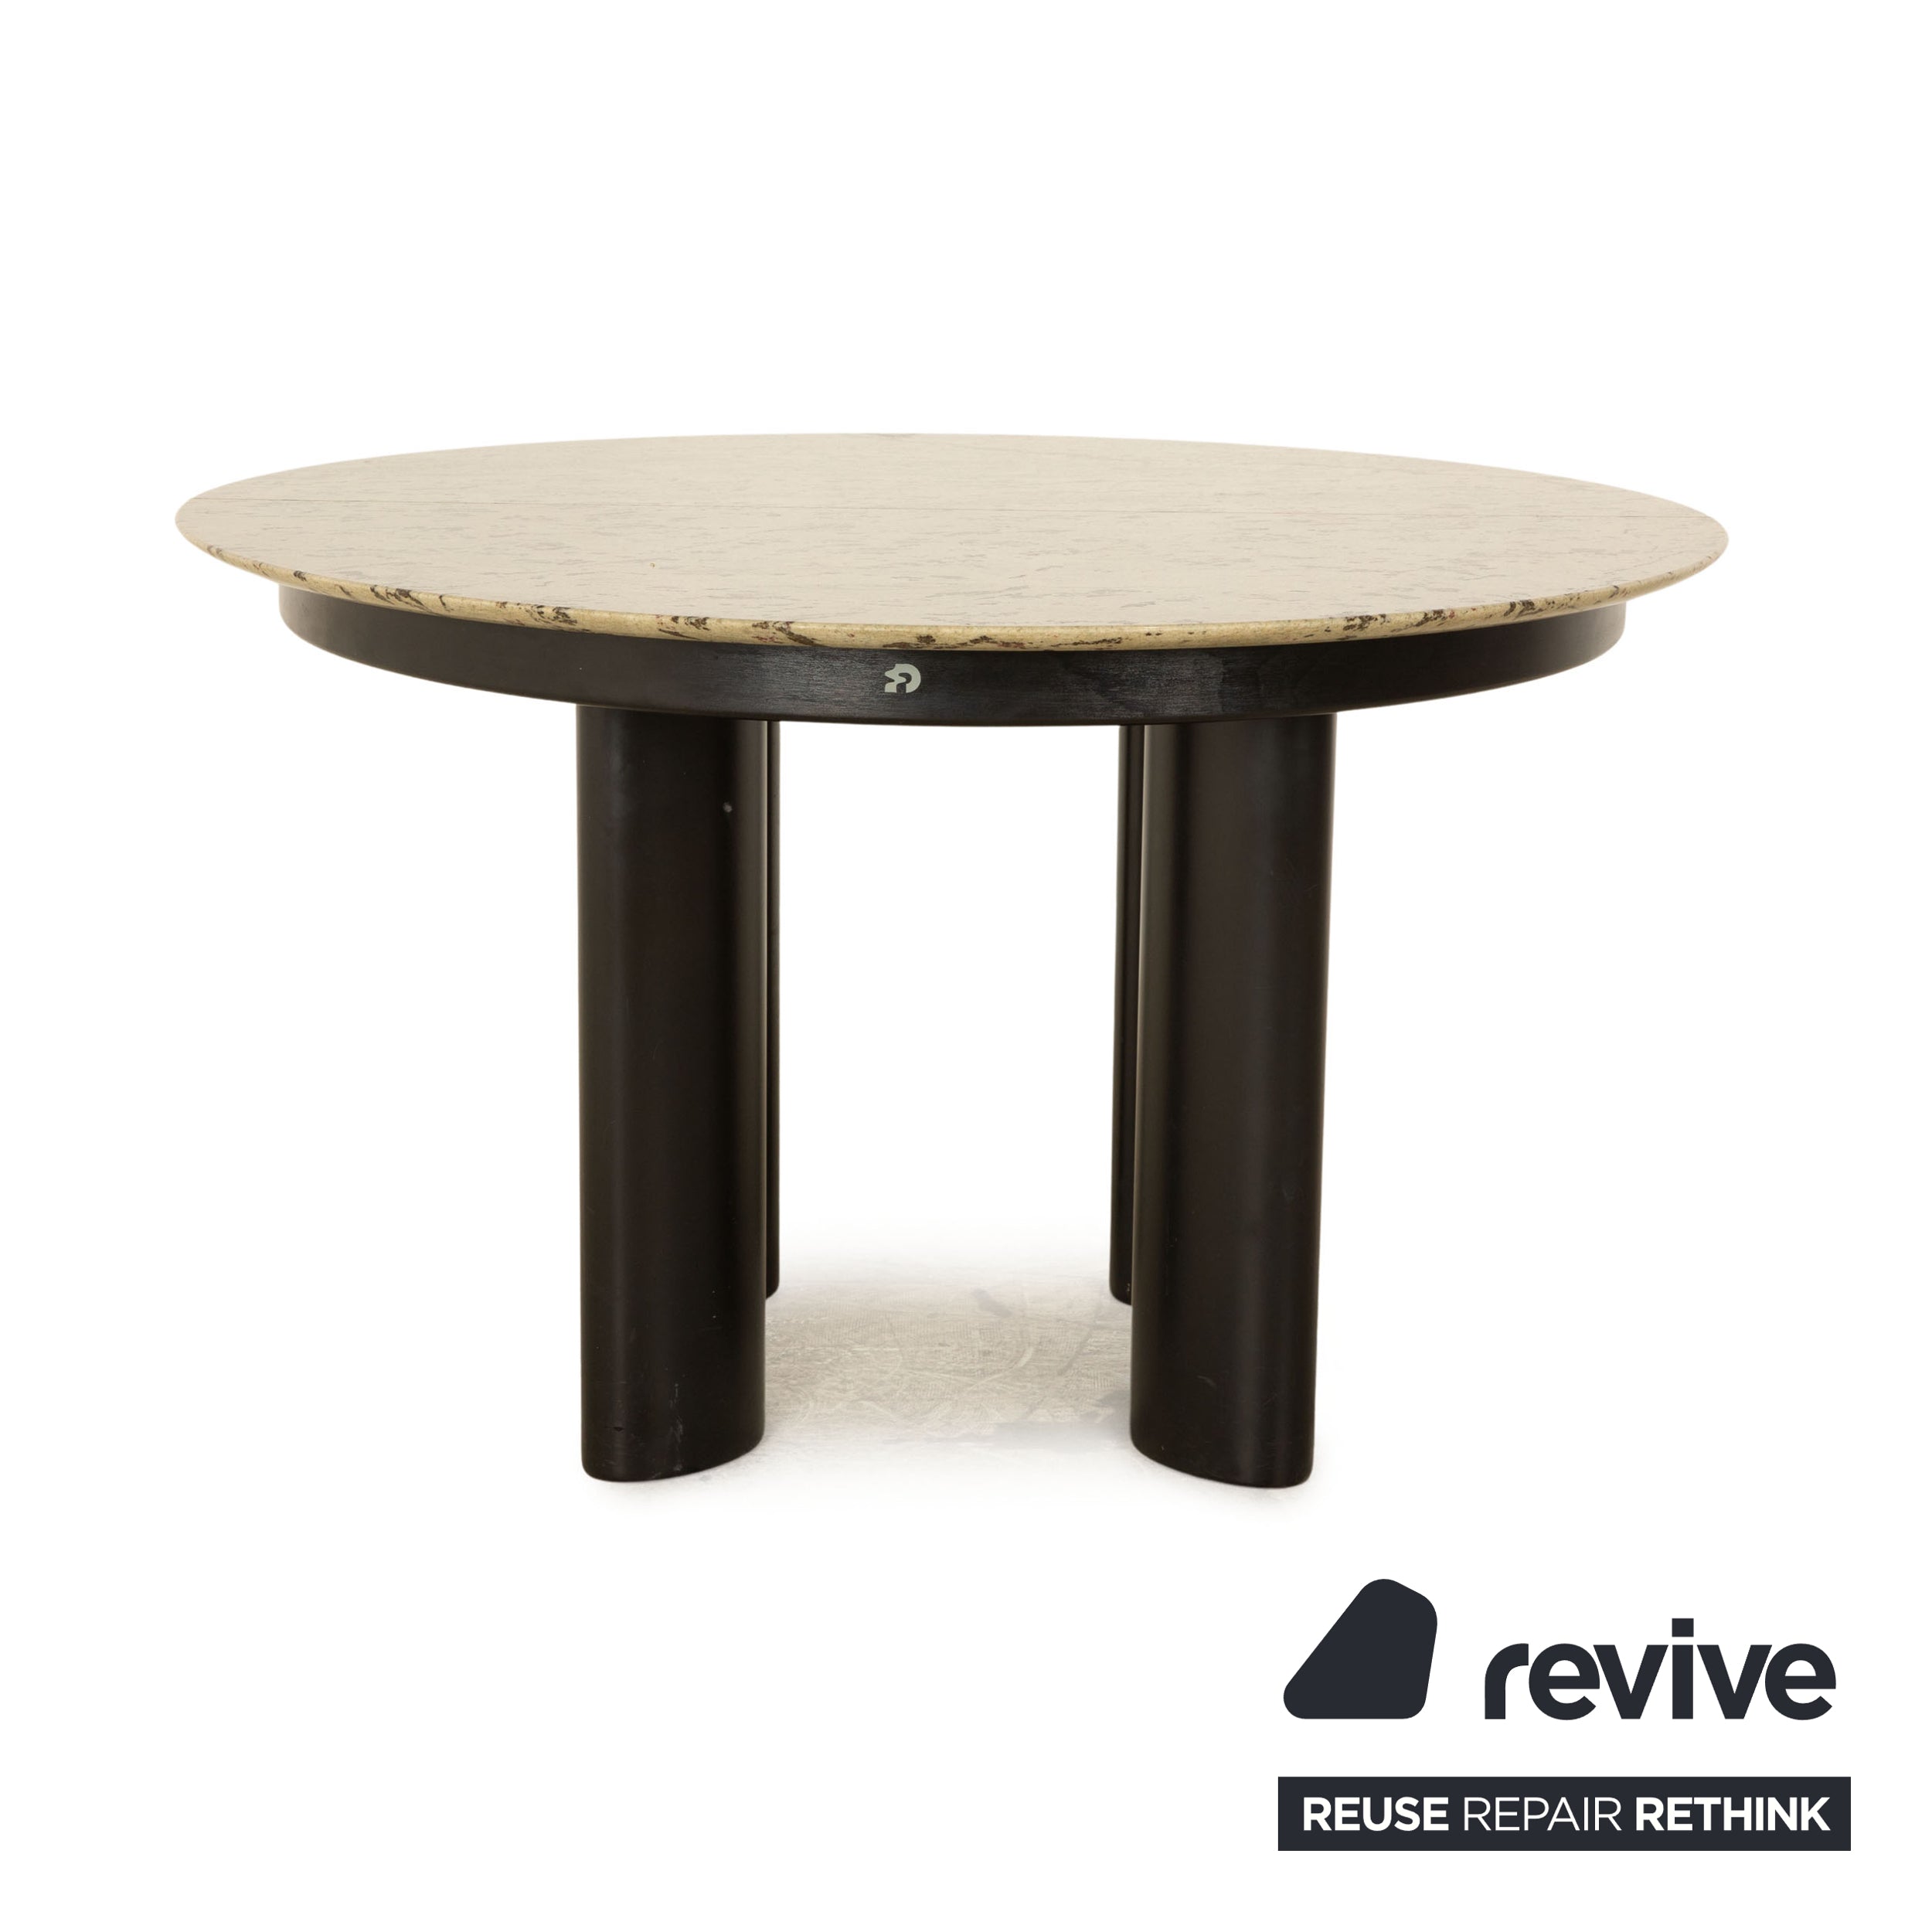 Draenert 1226 stone dining table gray black extendable 125/225 x 74 x 125